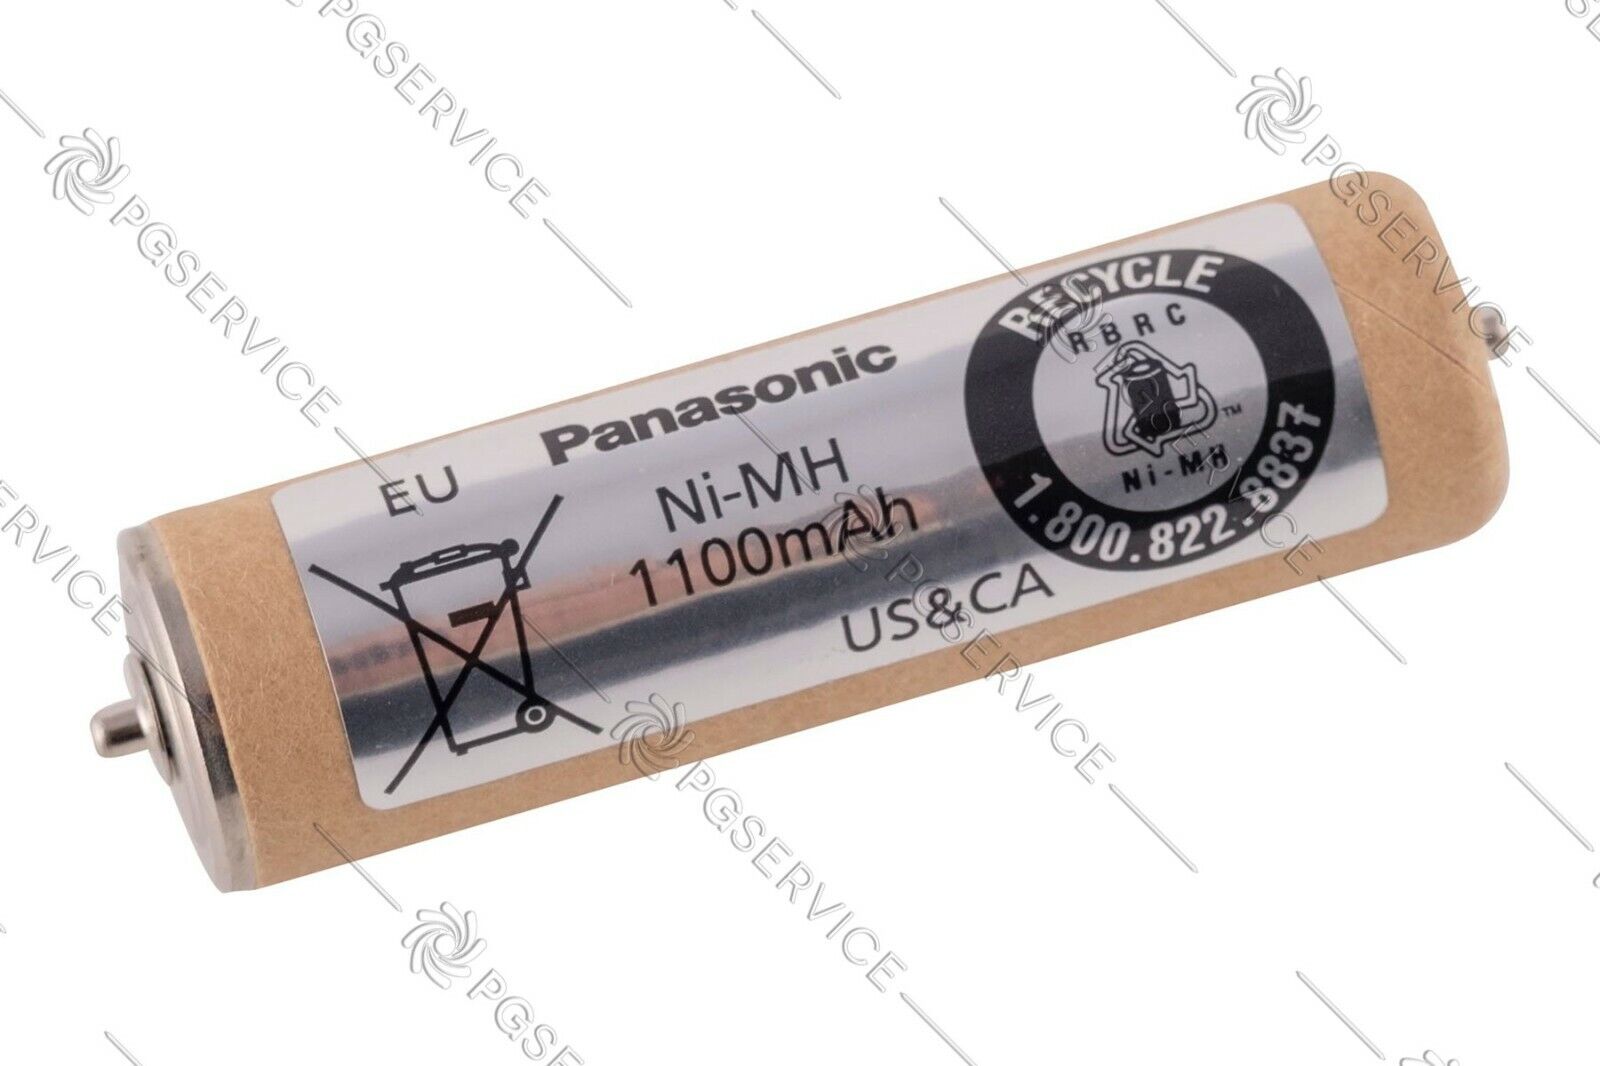 Panasonic batteria 1100mAh Ni-MH 1.2V  54.5mm rasoio ER121 ER-PA10 ER-PA11